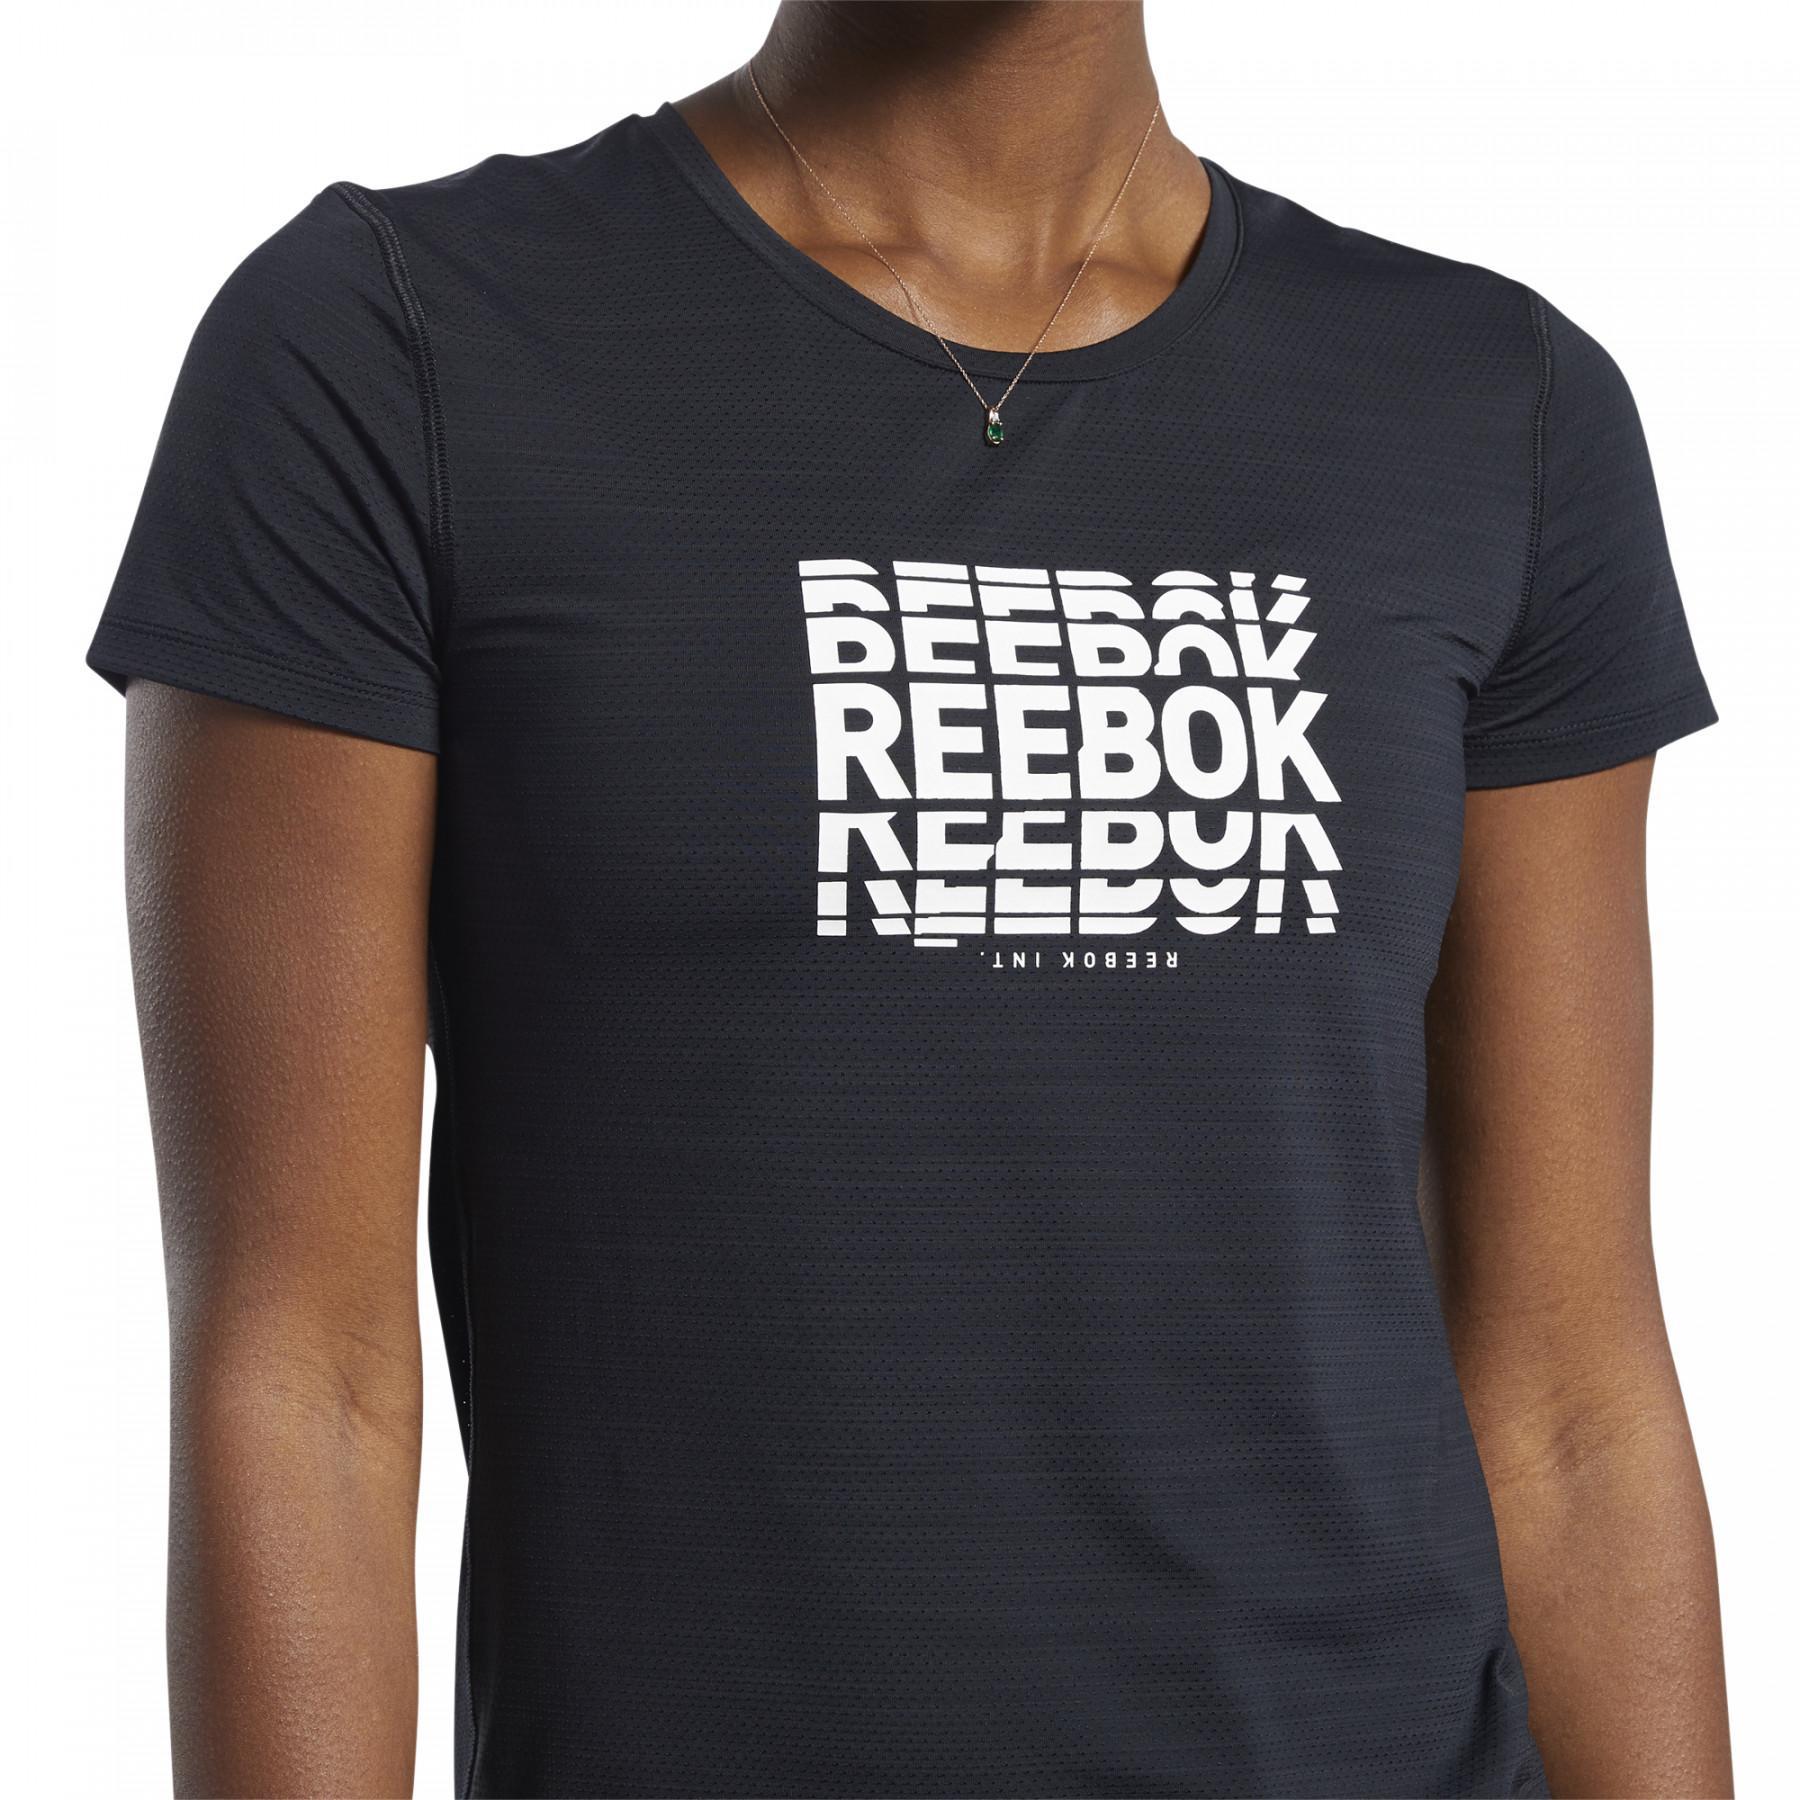 Camiseta feminina Reebok ActivChill Graphic